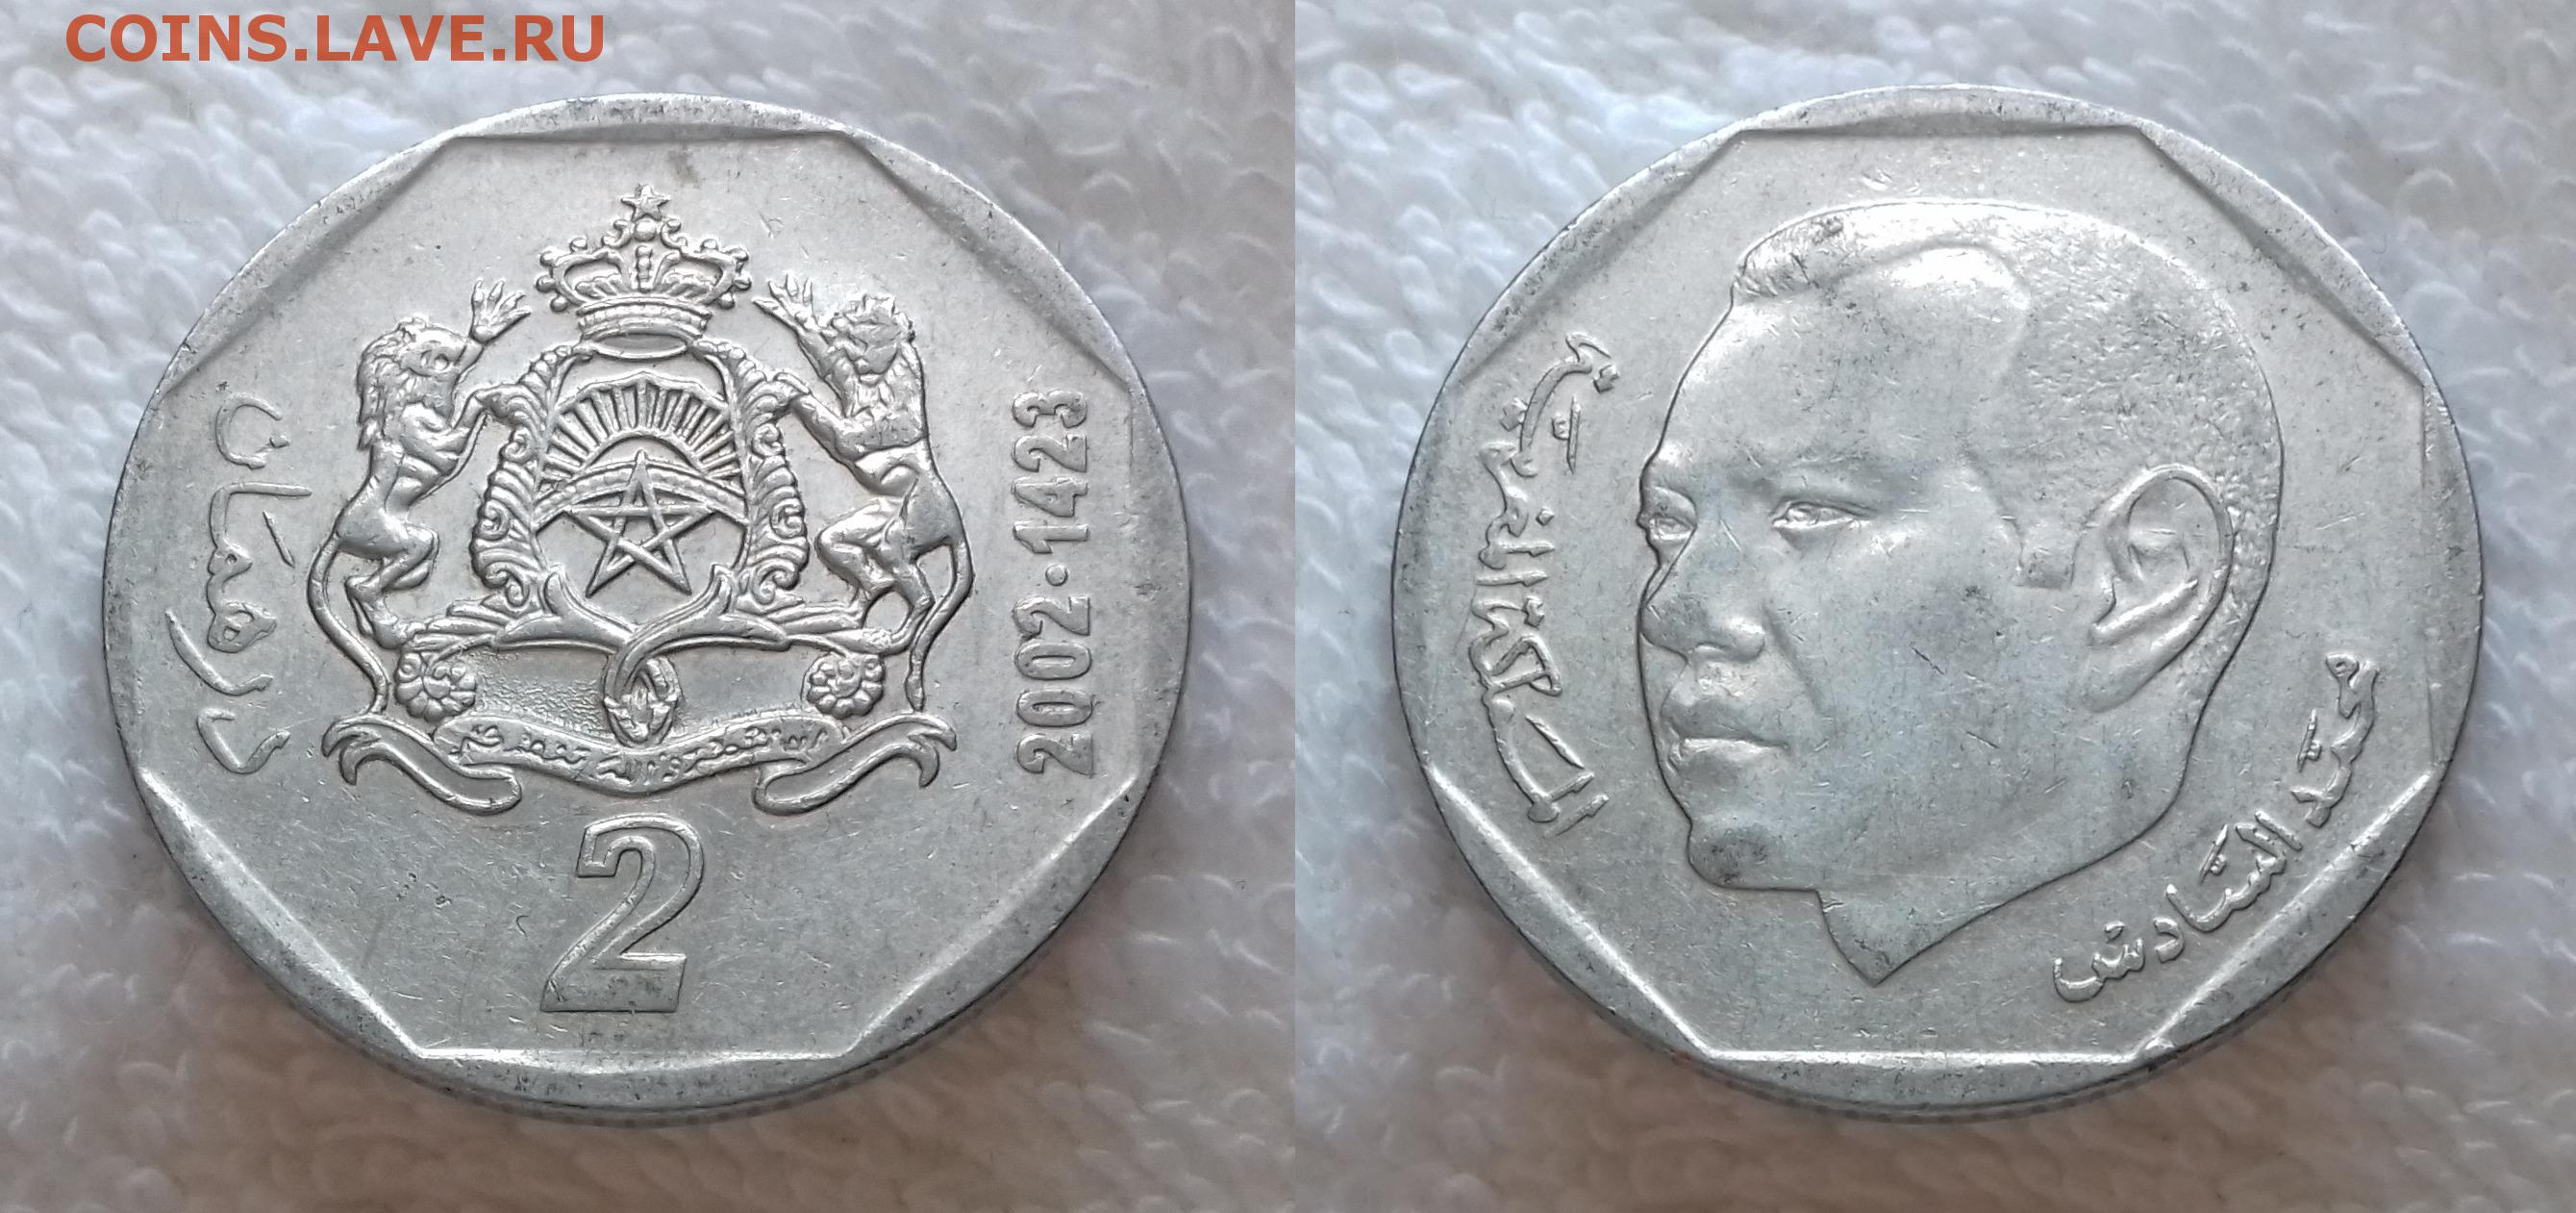 Вклад в дирхамах. Монета 2 дирхама Марокко 2002 года. 100 Марокканских дирхамов монета 2008. Монета 2 дирхама Египет. Марокко 0,5 dirham 2002.